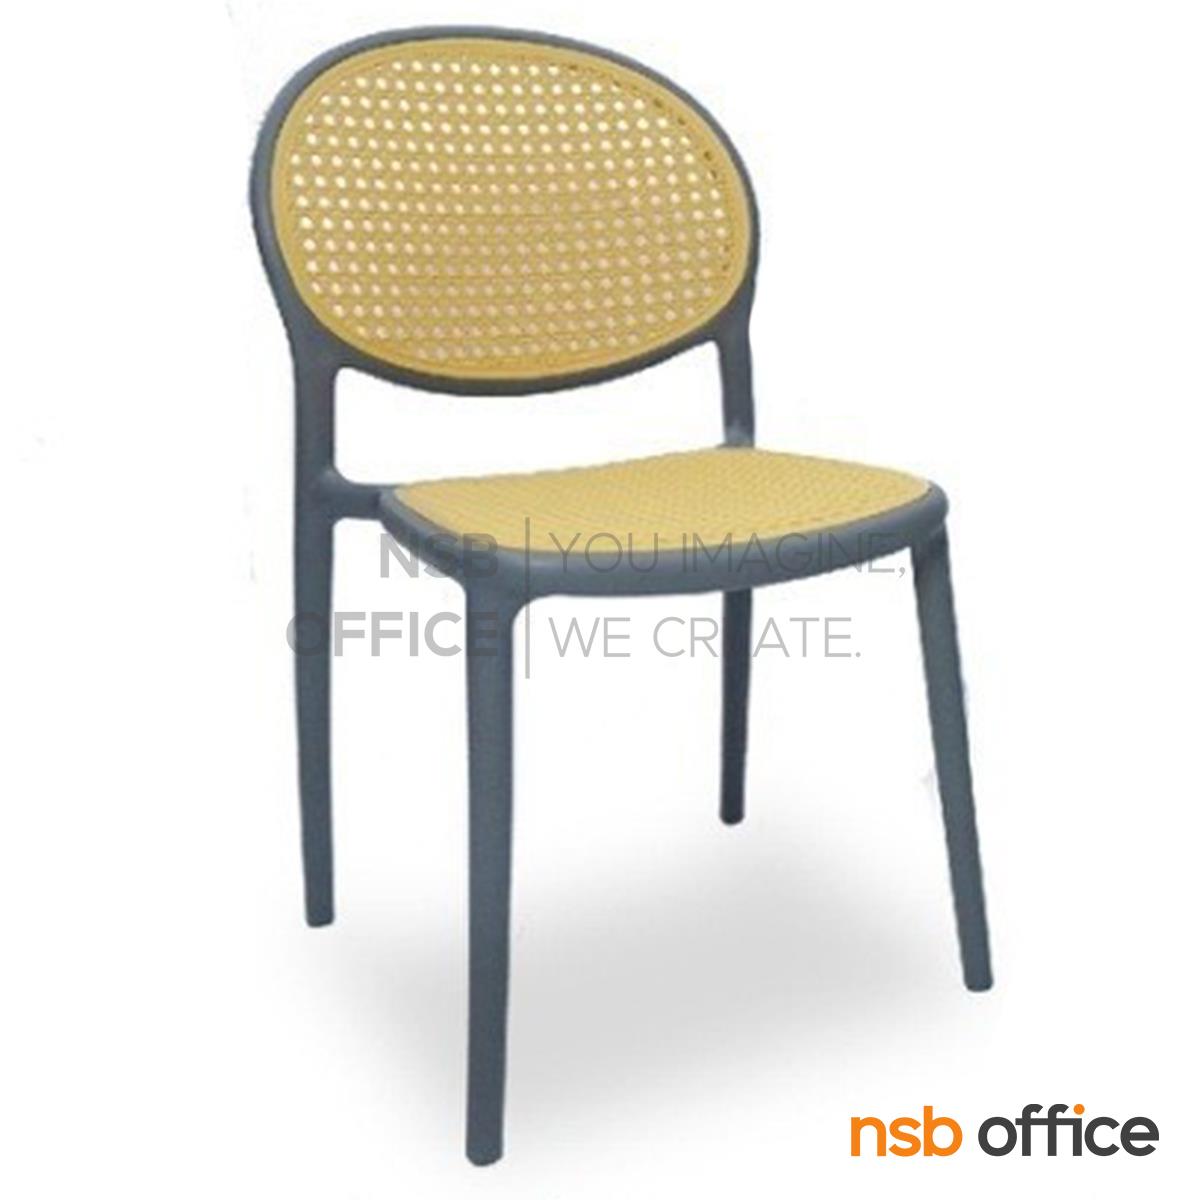 B11A082:เก้าอี้โมเดิร์นพลาสติก รุ่น Bubble (บับเบิ้ล) ขนาด 46W cm. ไม่มีเท้าแขน (บรรจุกล่องละ 4 ตัว)